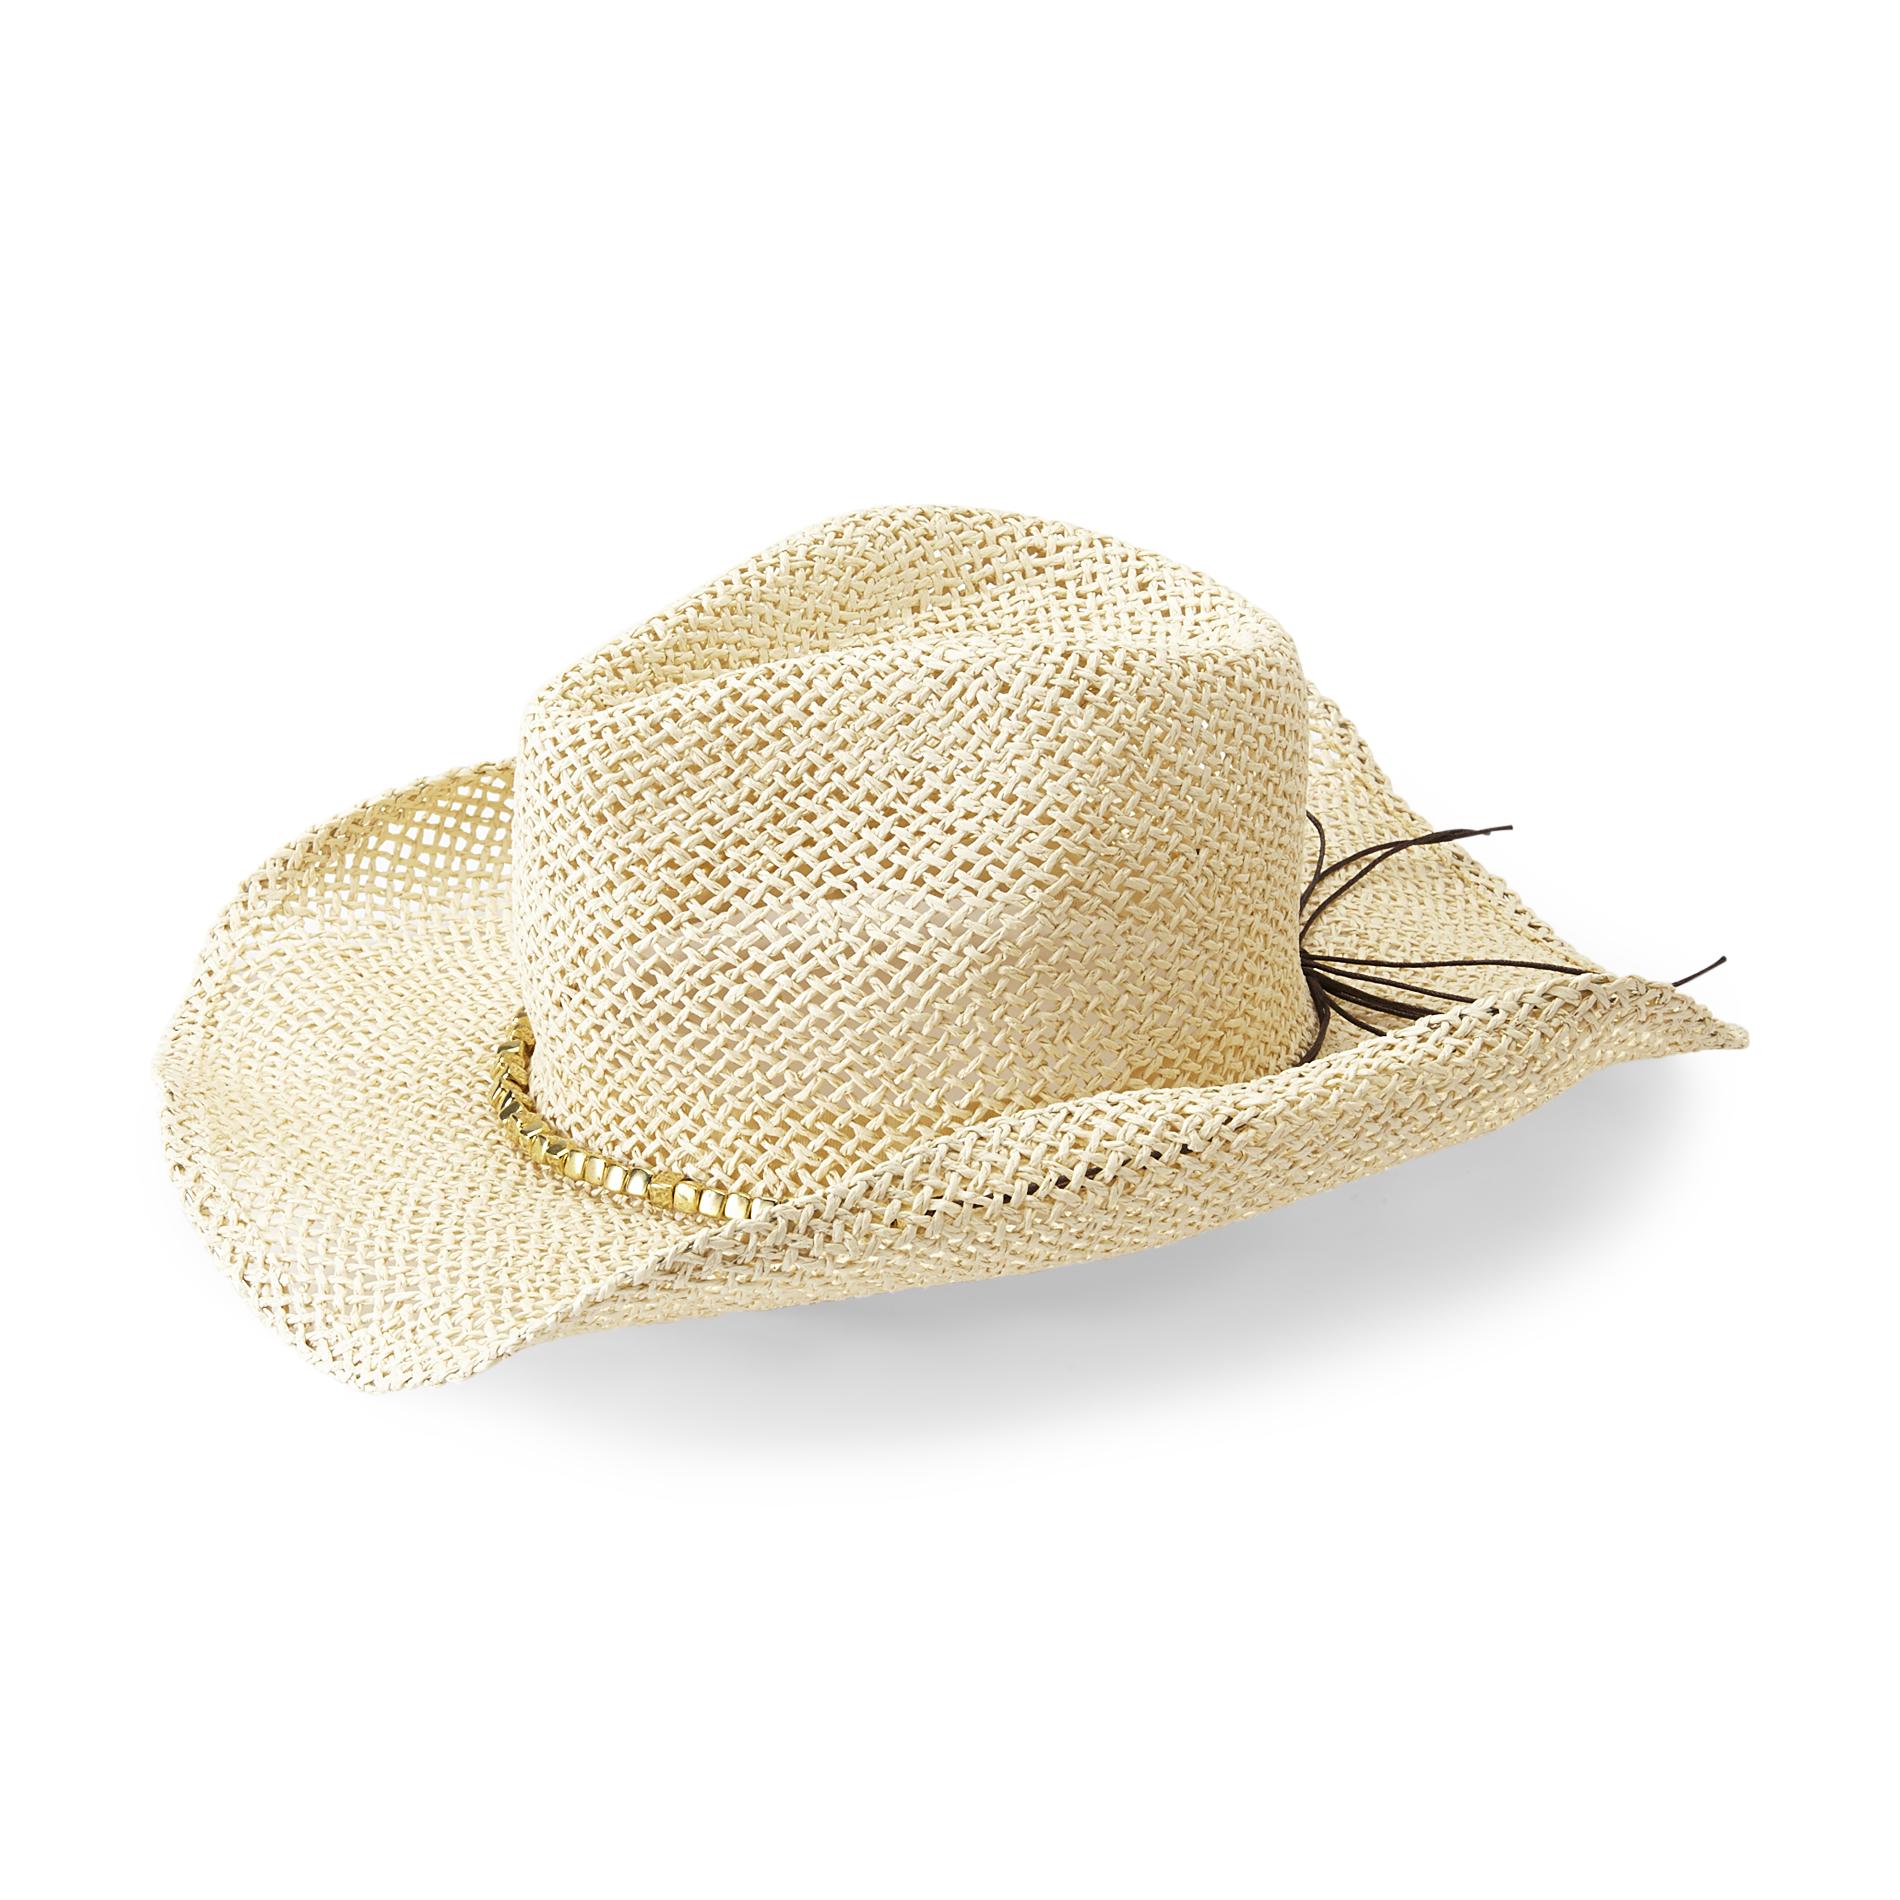 Joe Boxer Women's Straw Cowboy Hat - Beaded